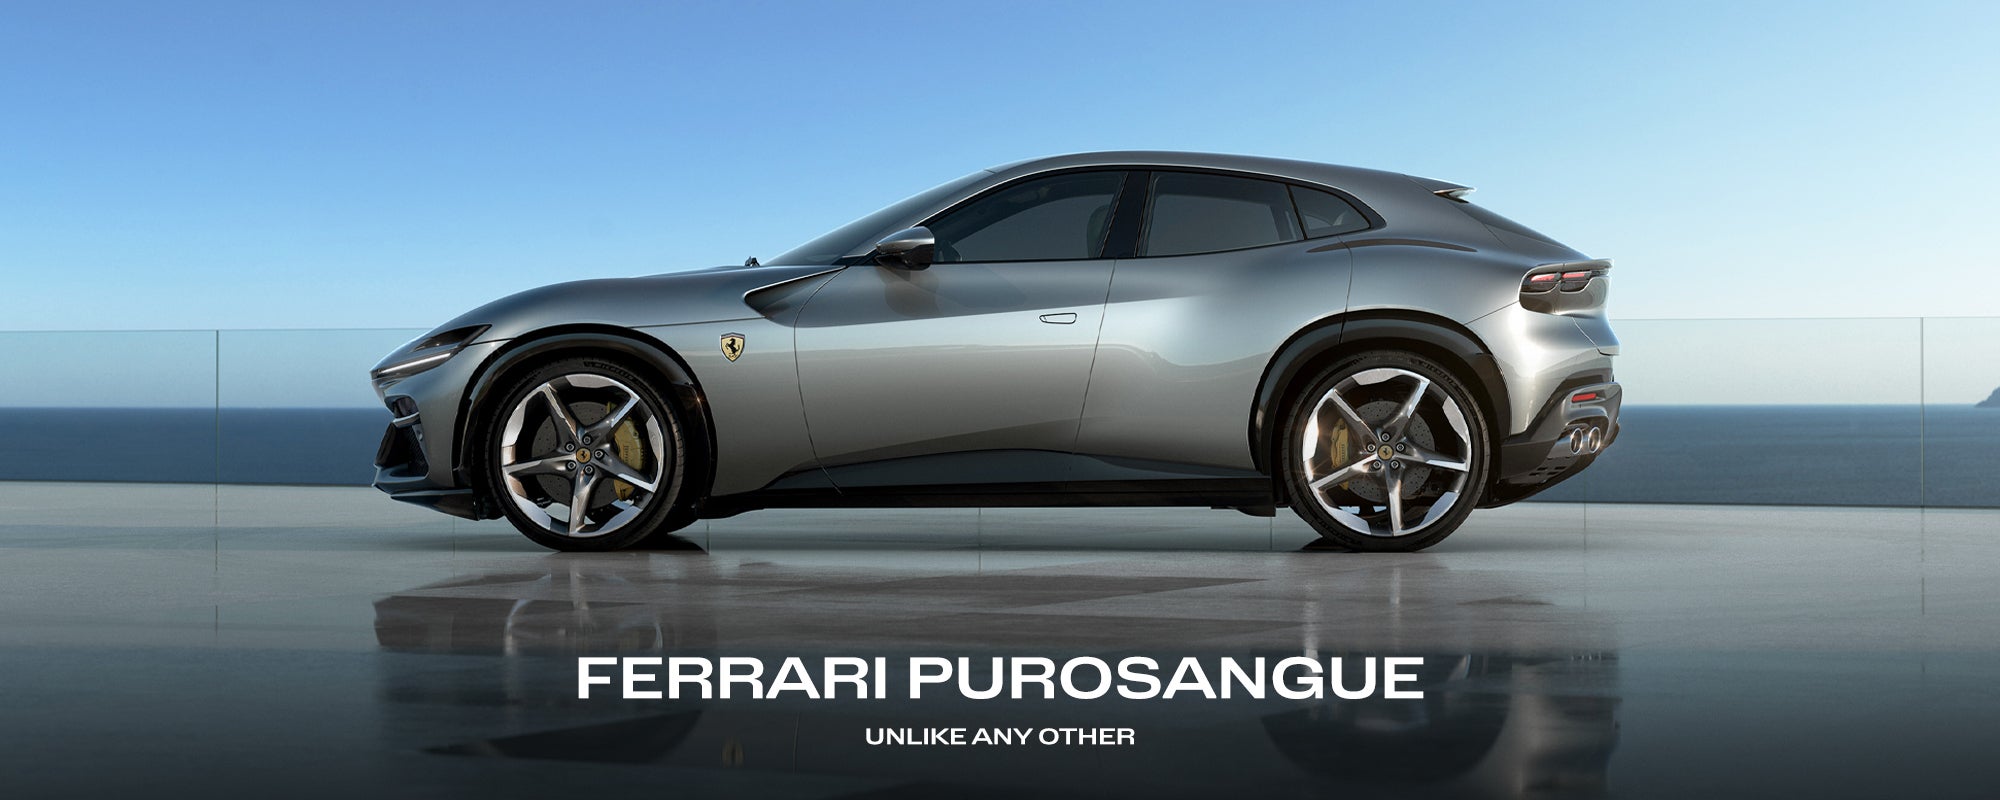 Ferrari Silicon Valley Purosangue